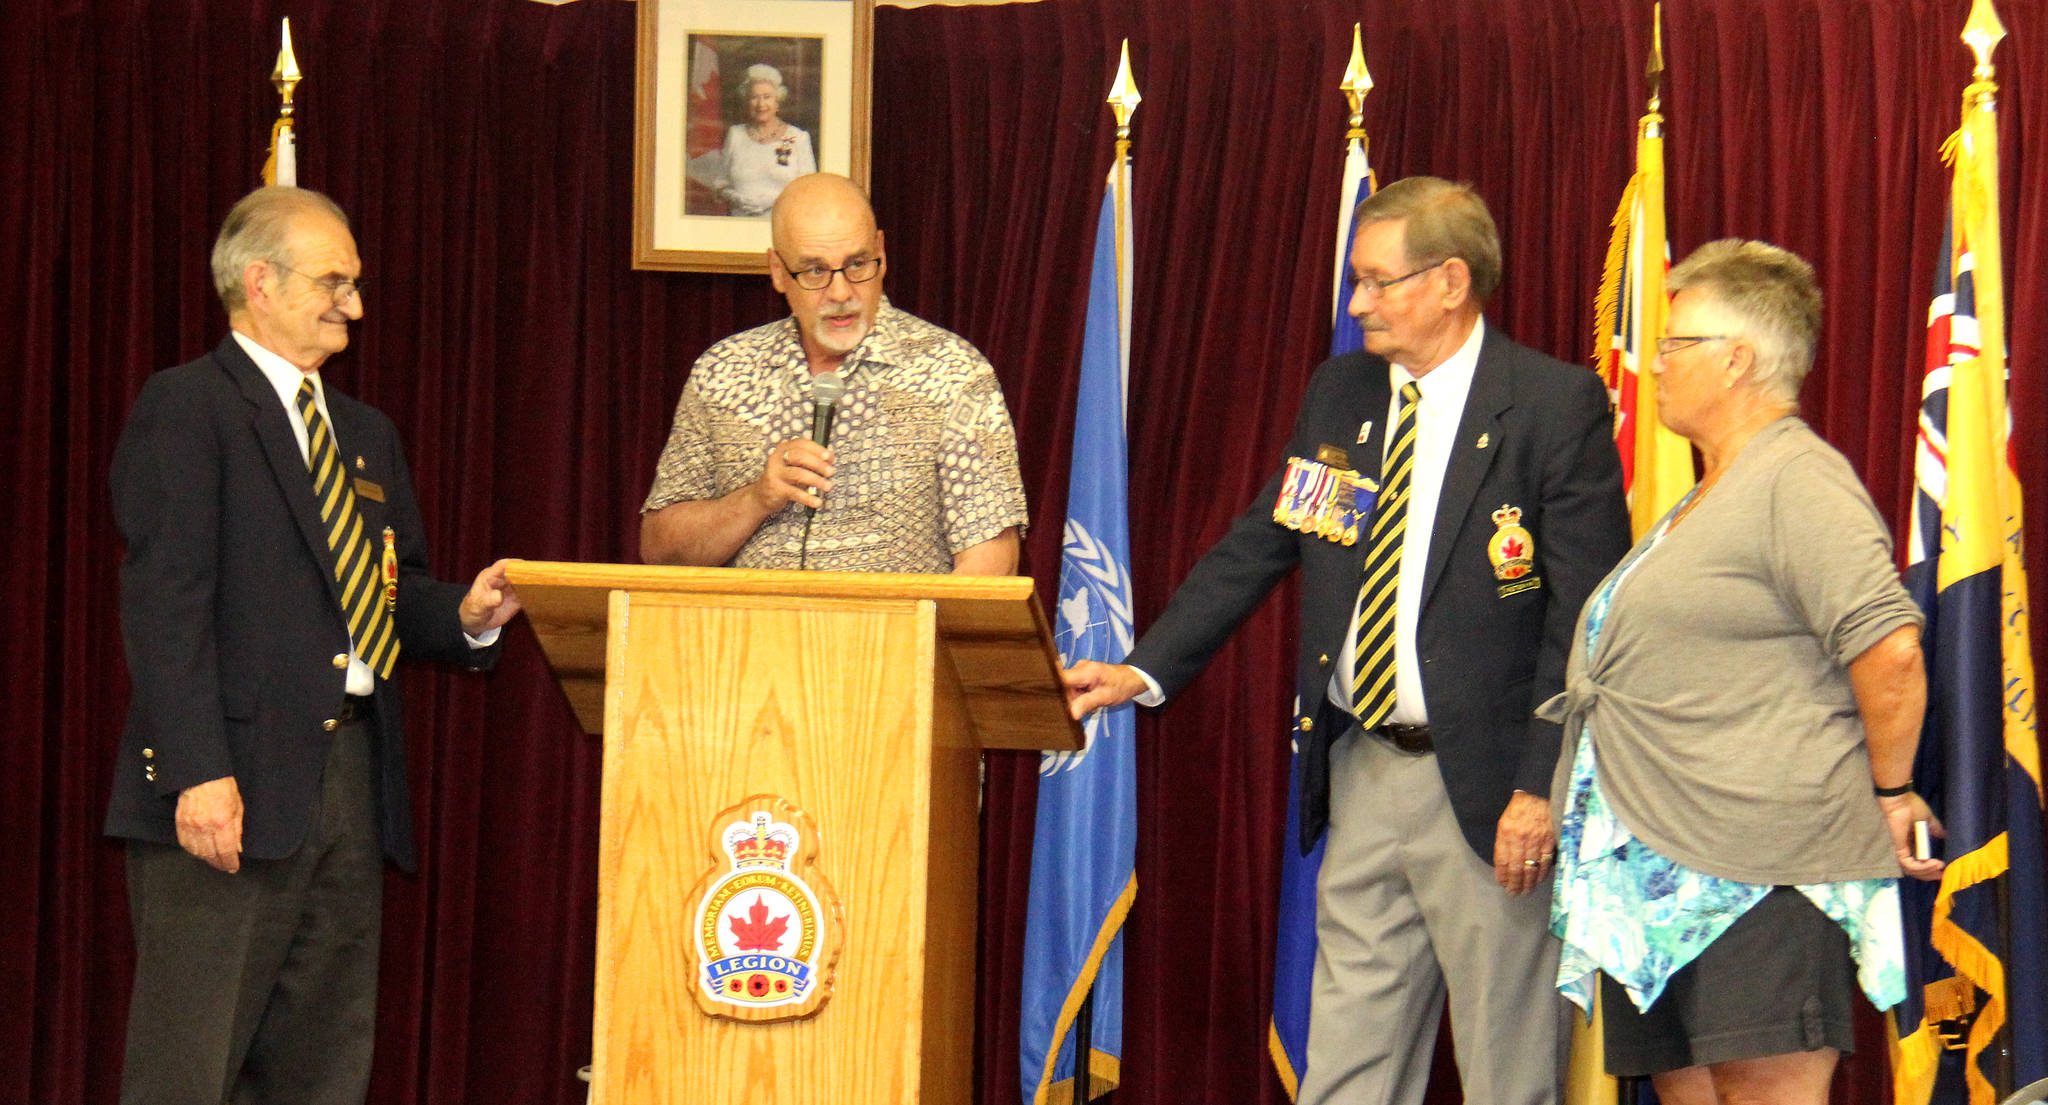 Sylvan Lake Legion honours the memory of past president